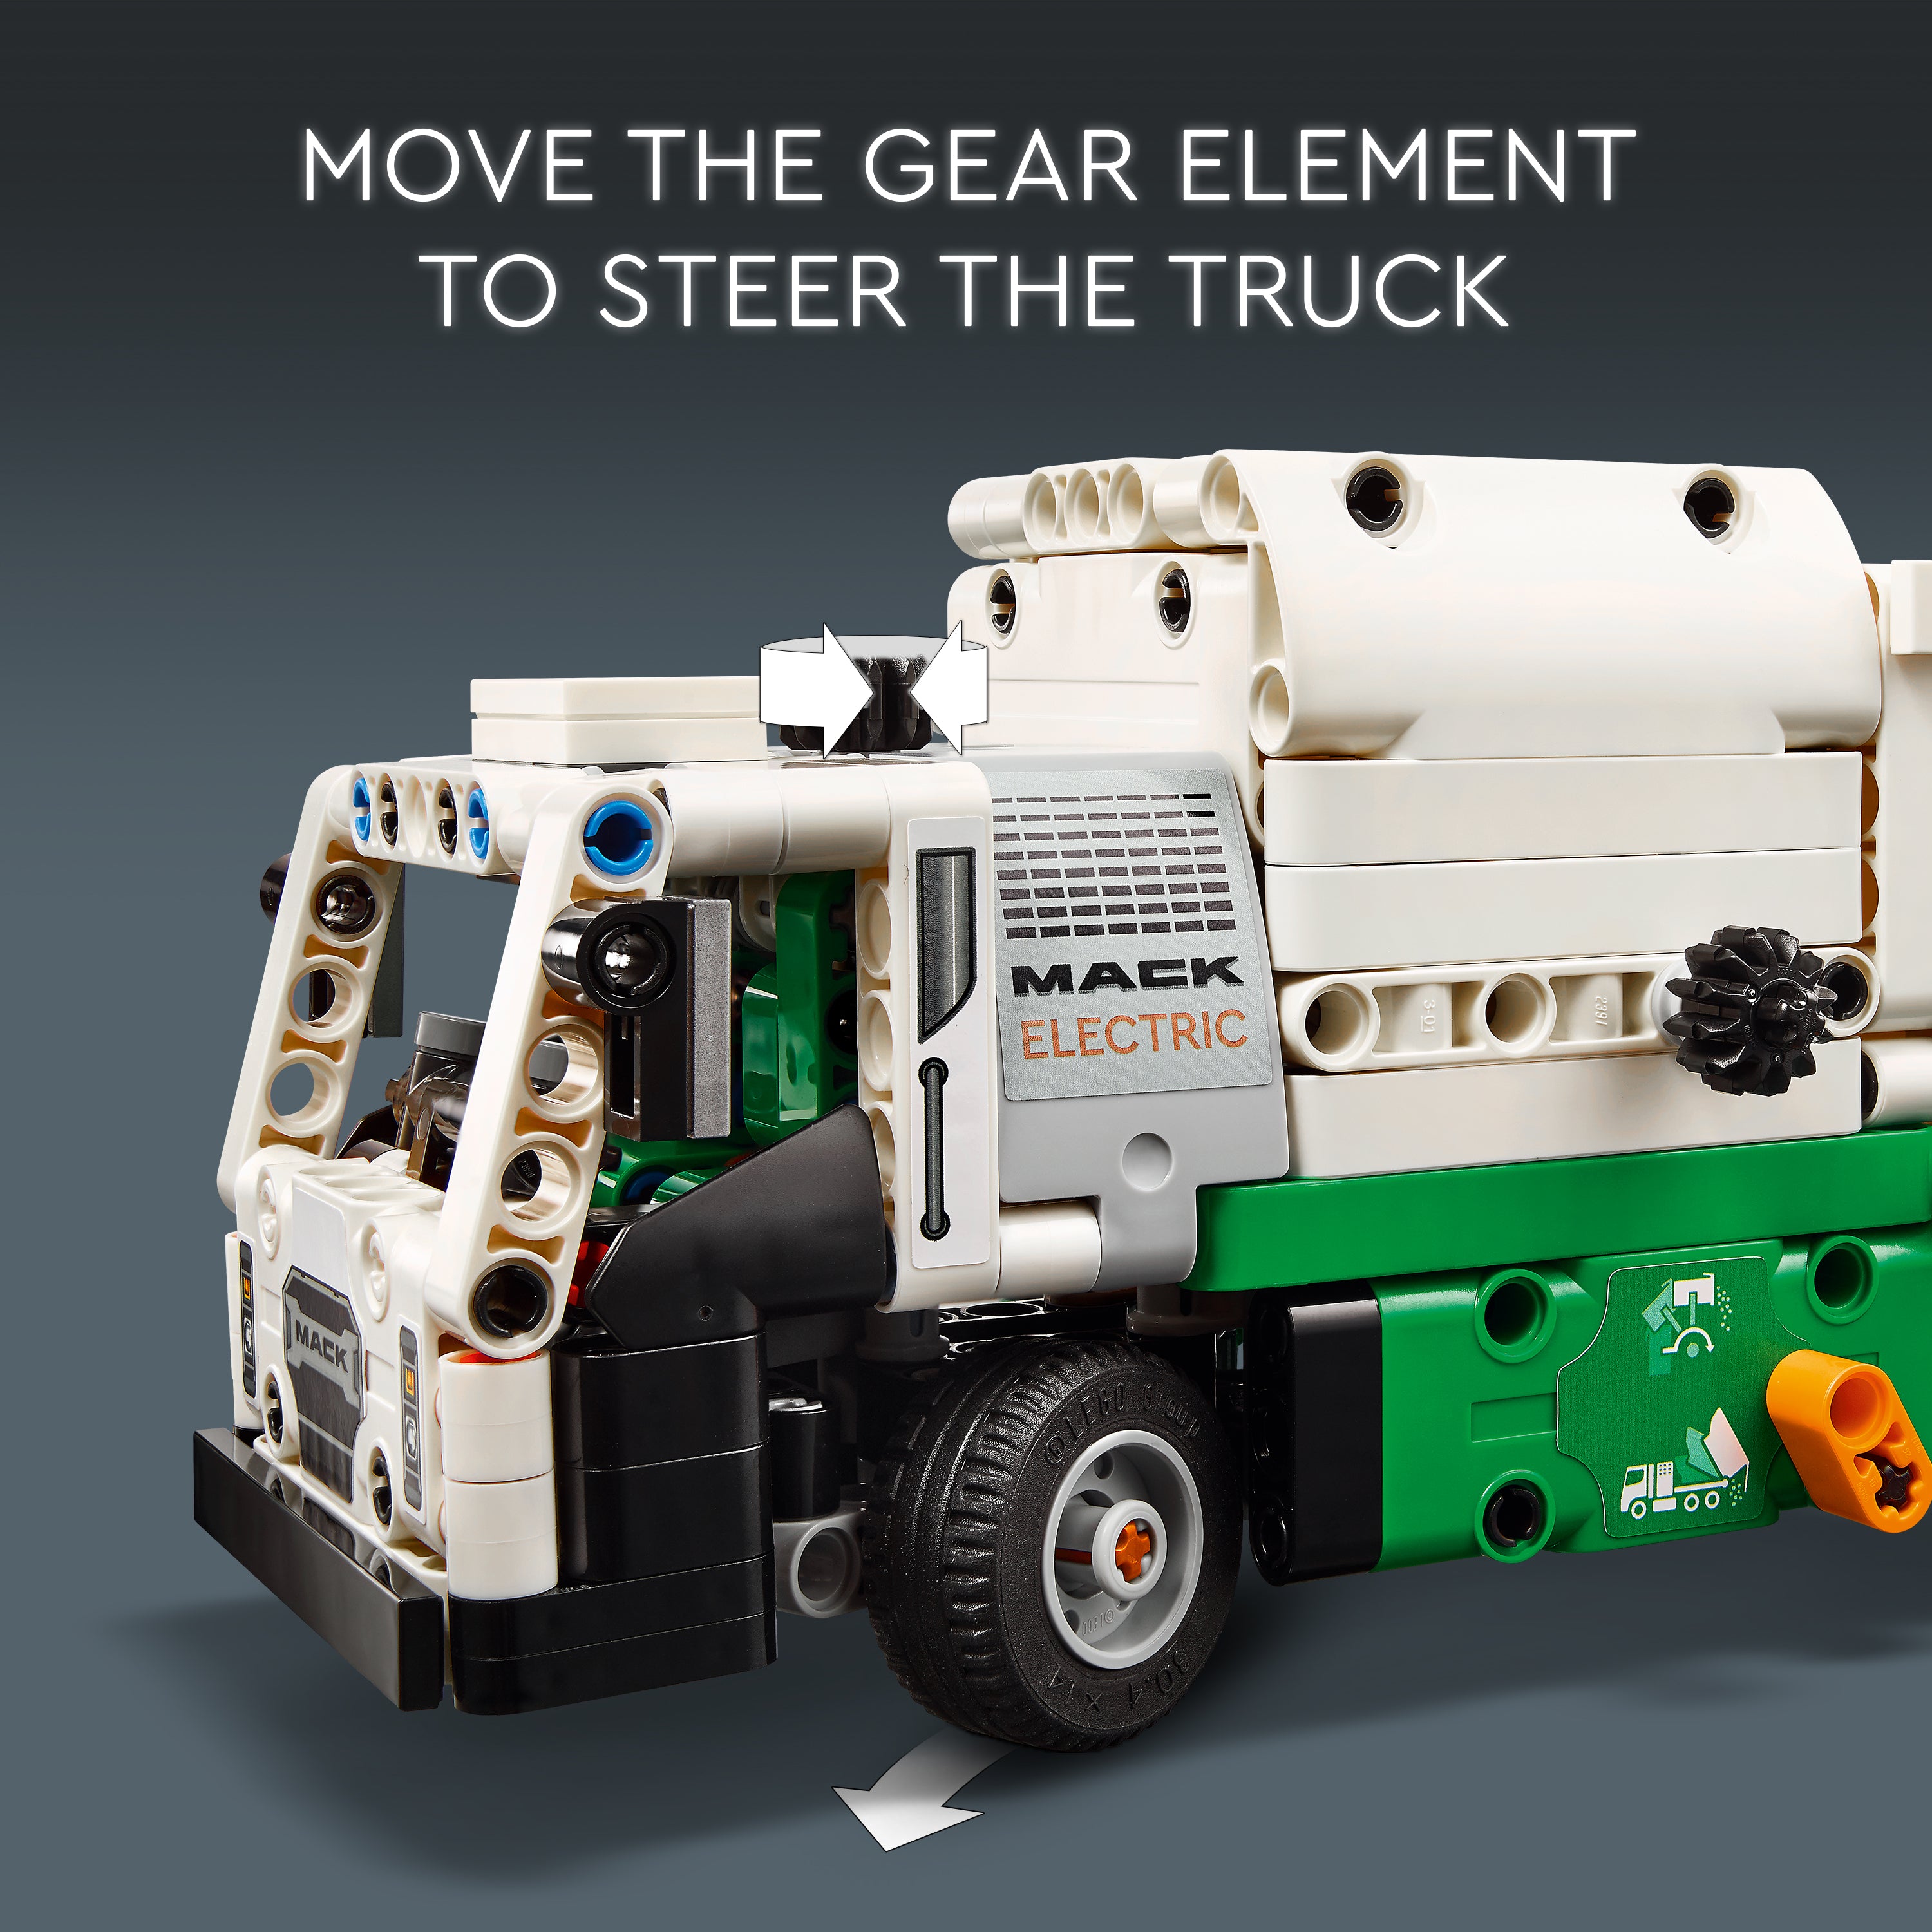 Lego 42167 Mack LR Electric Garbage